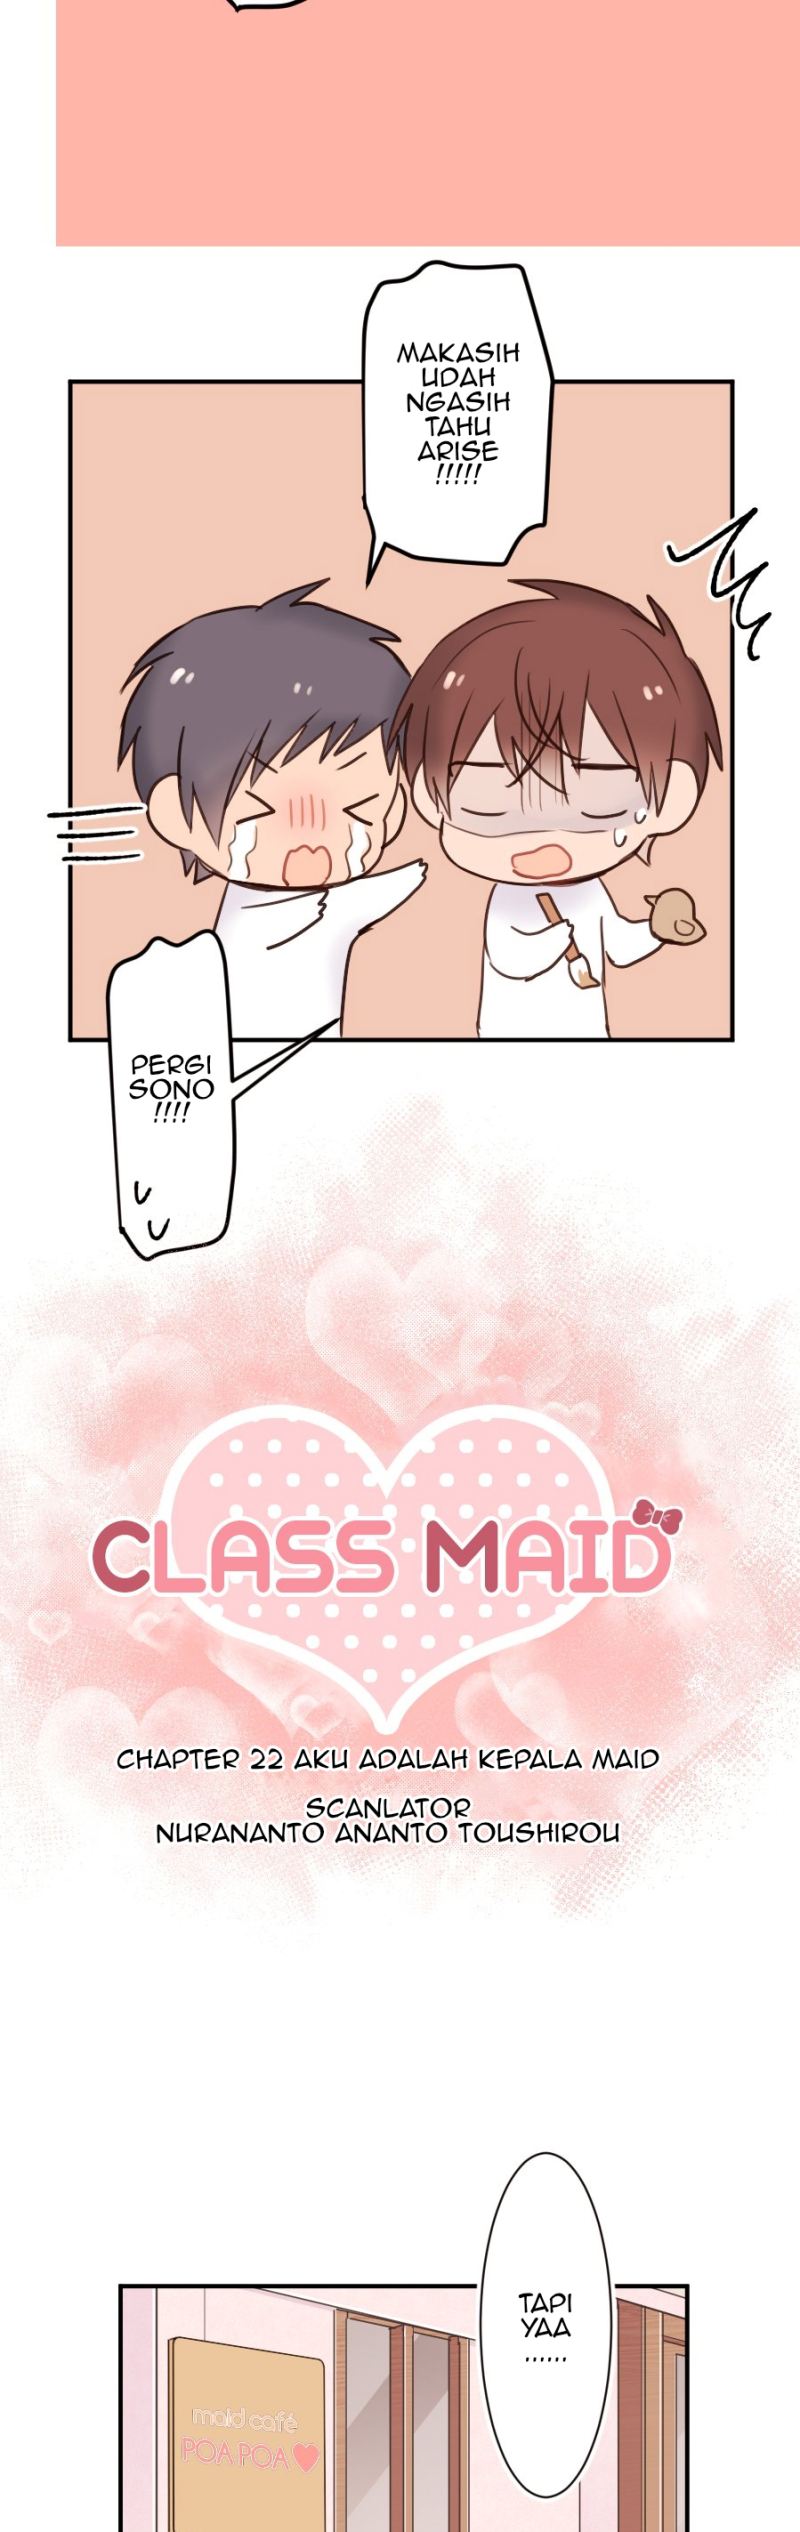 Class Maid (shimamura) Chapter 22